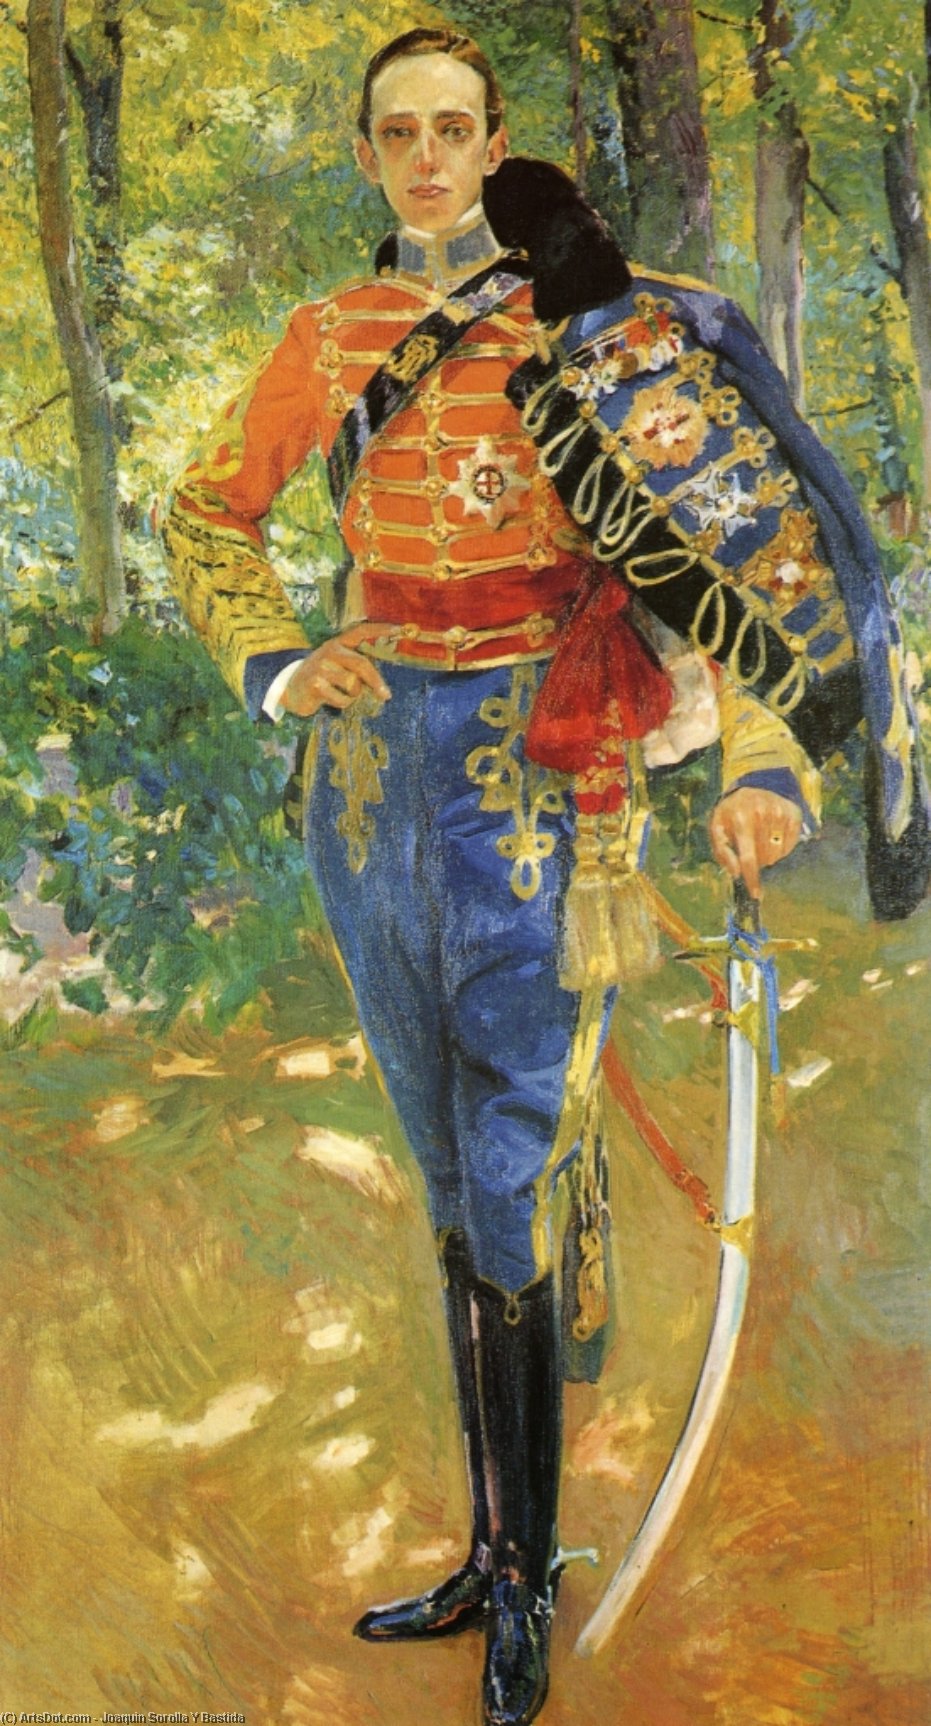 Buy Museum Art Reproductions Alphonso XIII in Hussars Uniform by Joaquin Sorolla Y Bastida (1863-1923, Spain) | ArtsDot.com